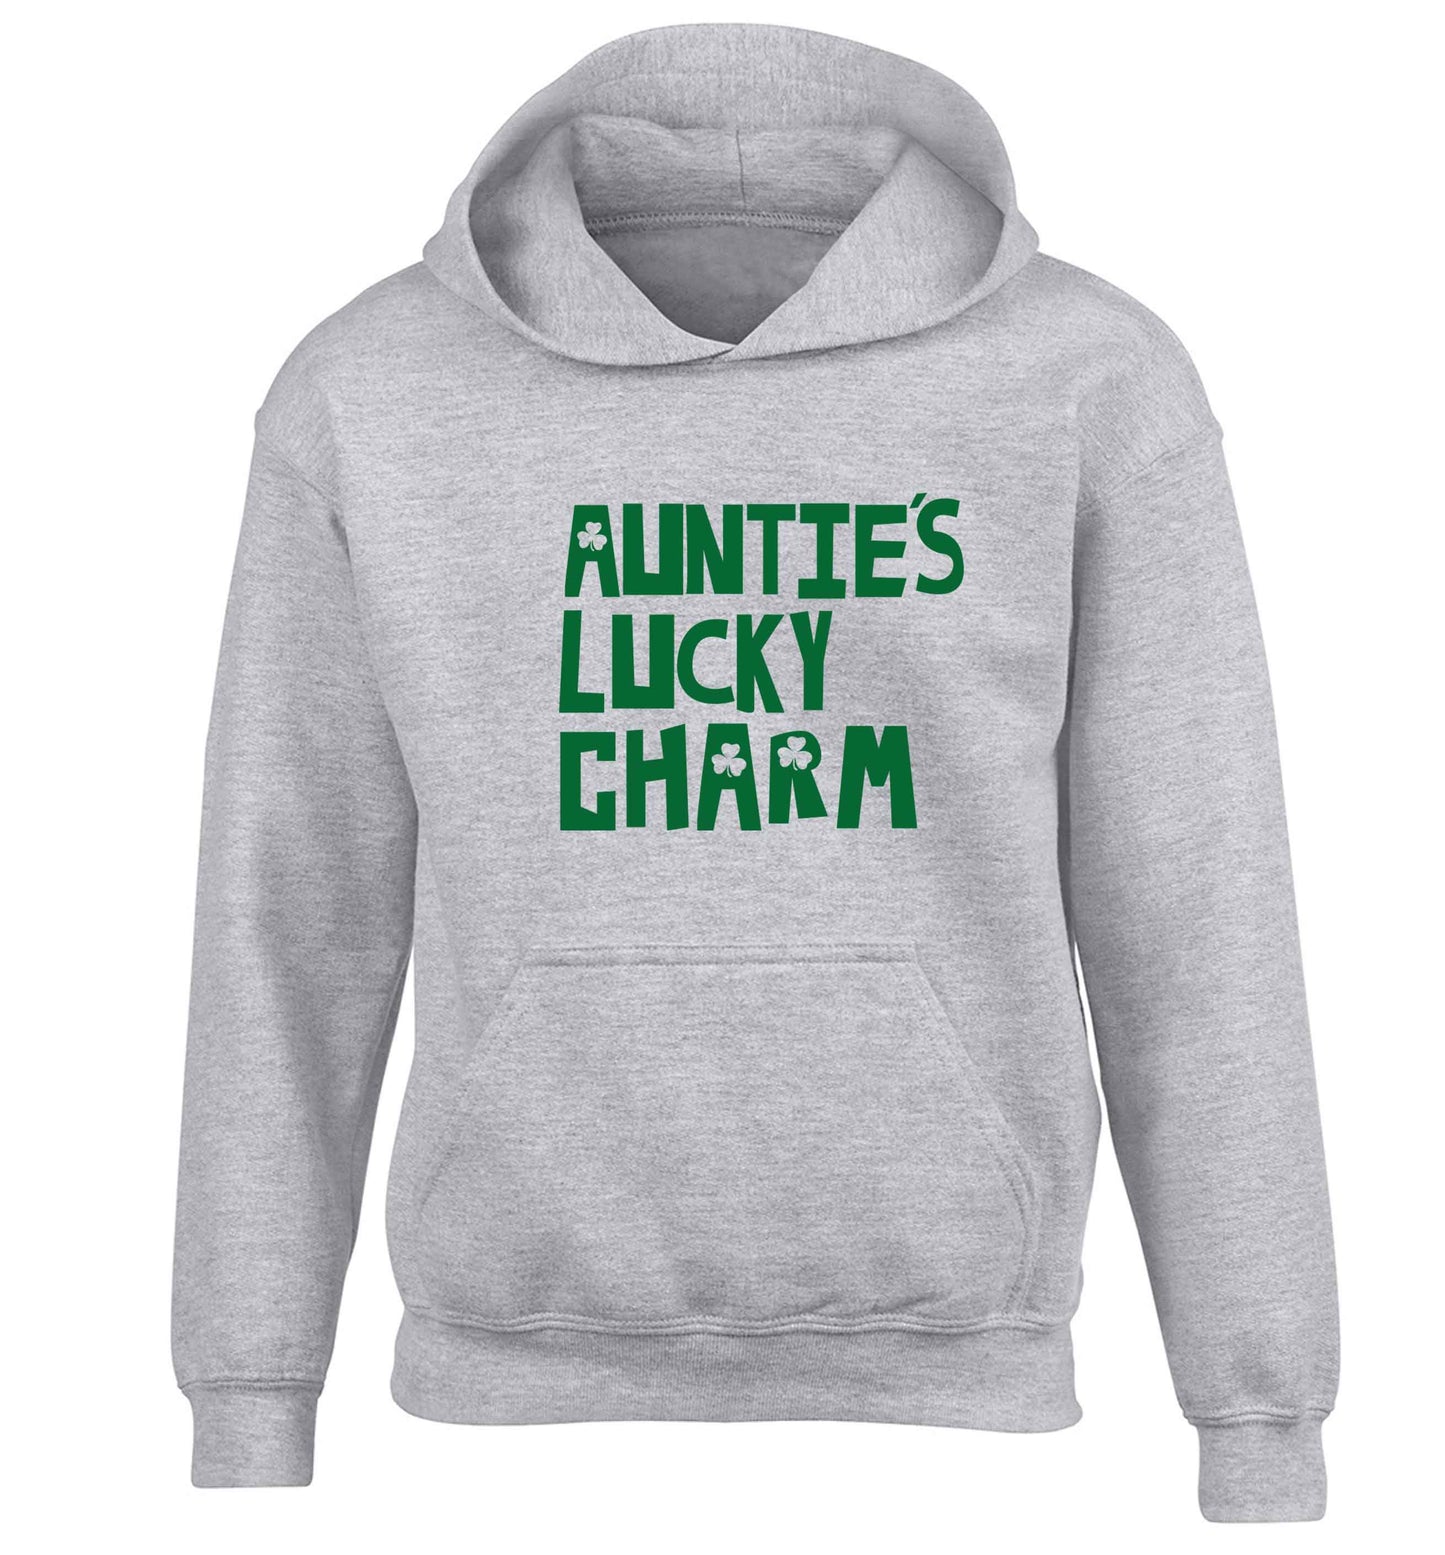 Auntie's lucky charm children's grey hoodie 12-13 Years